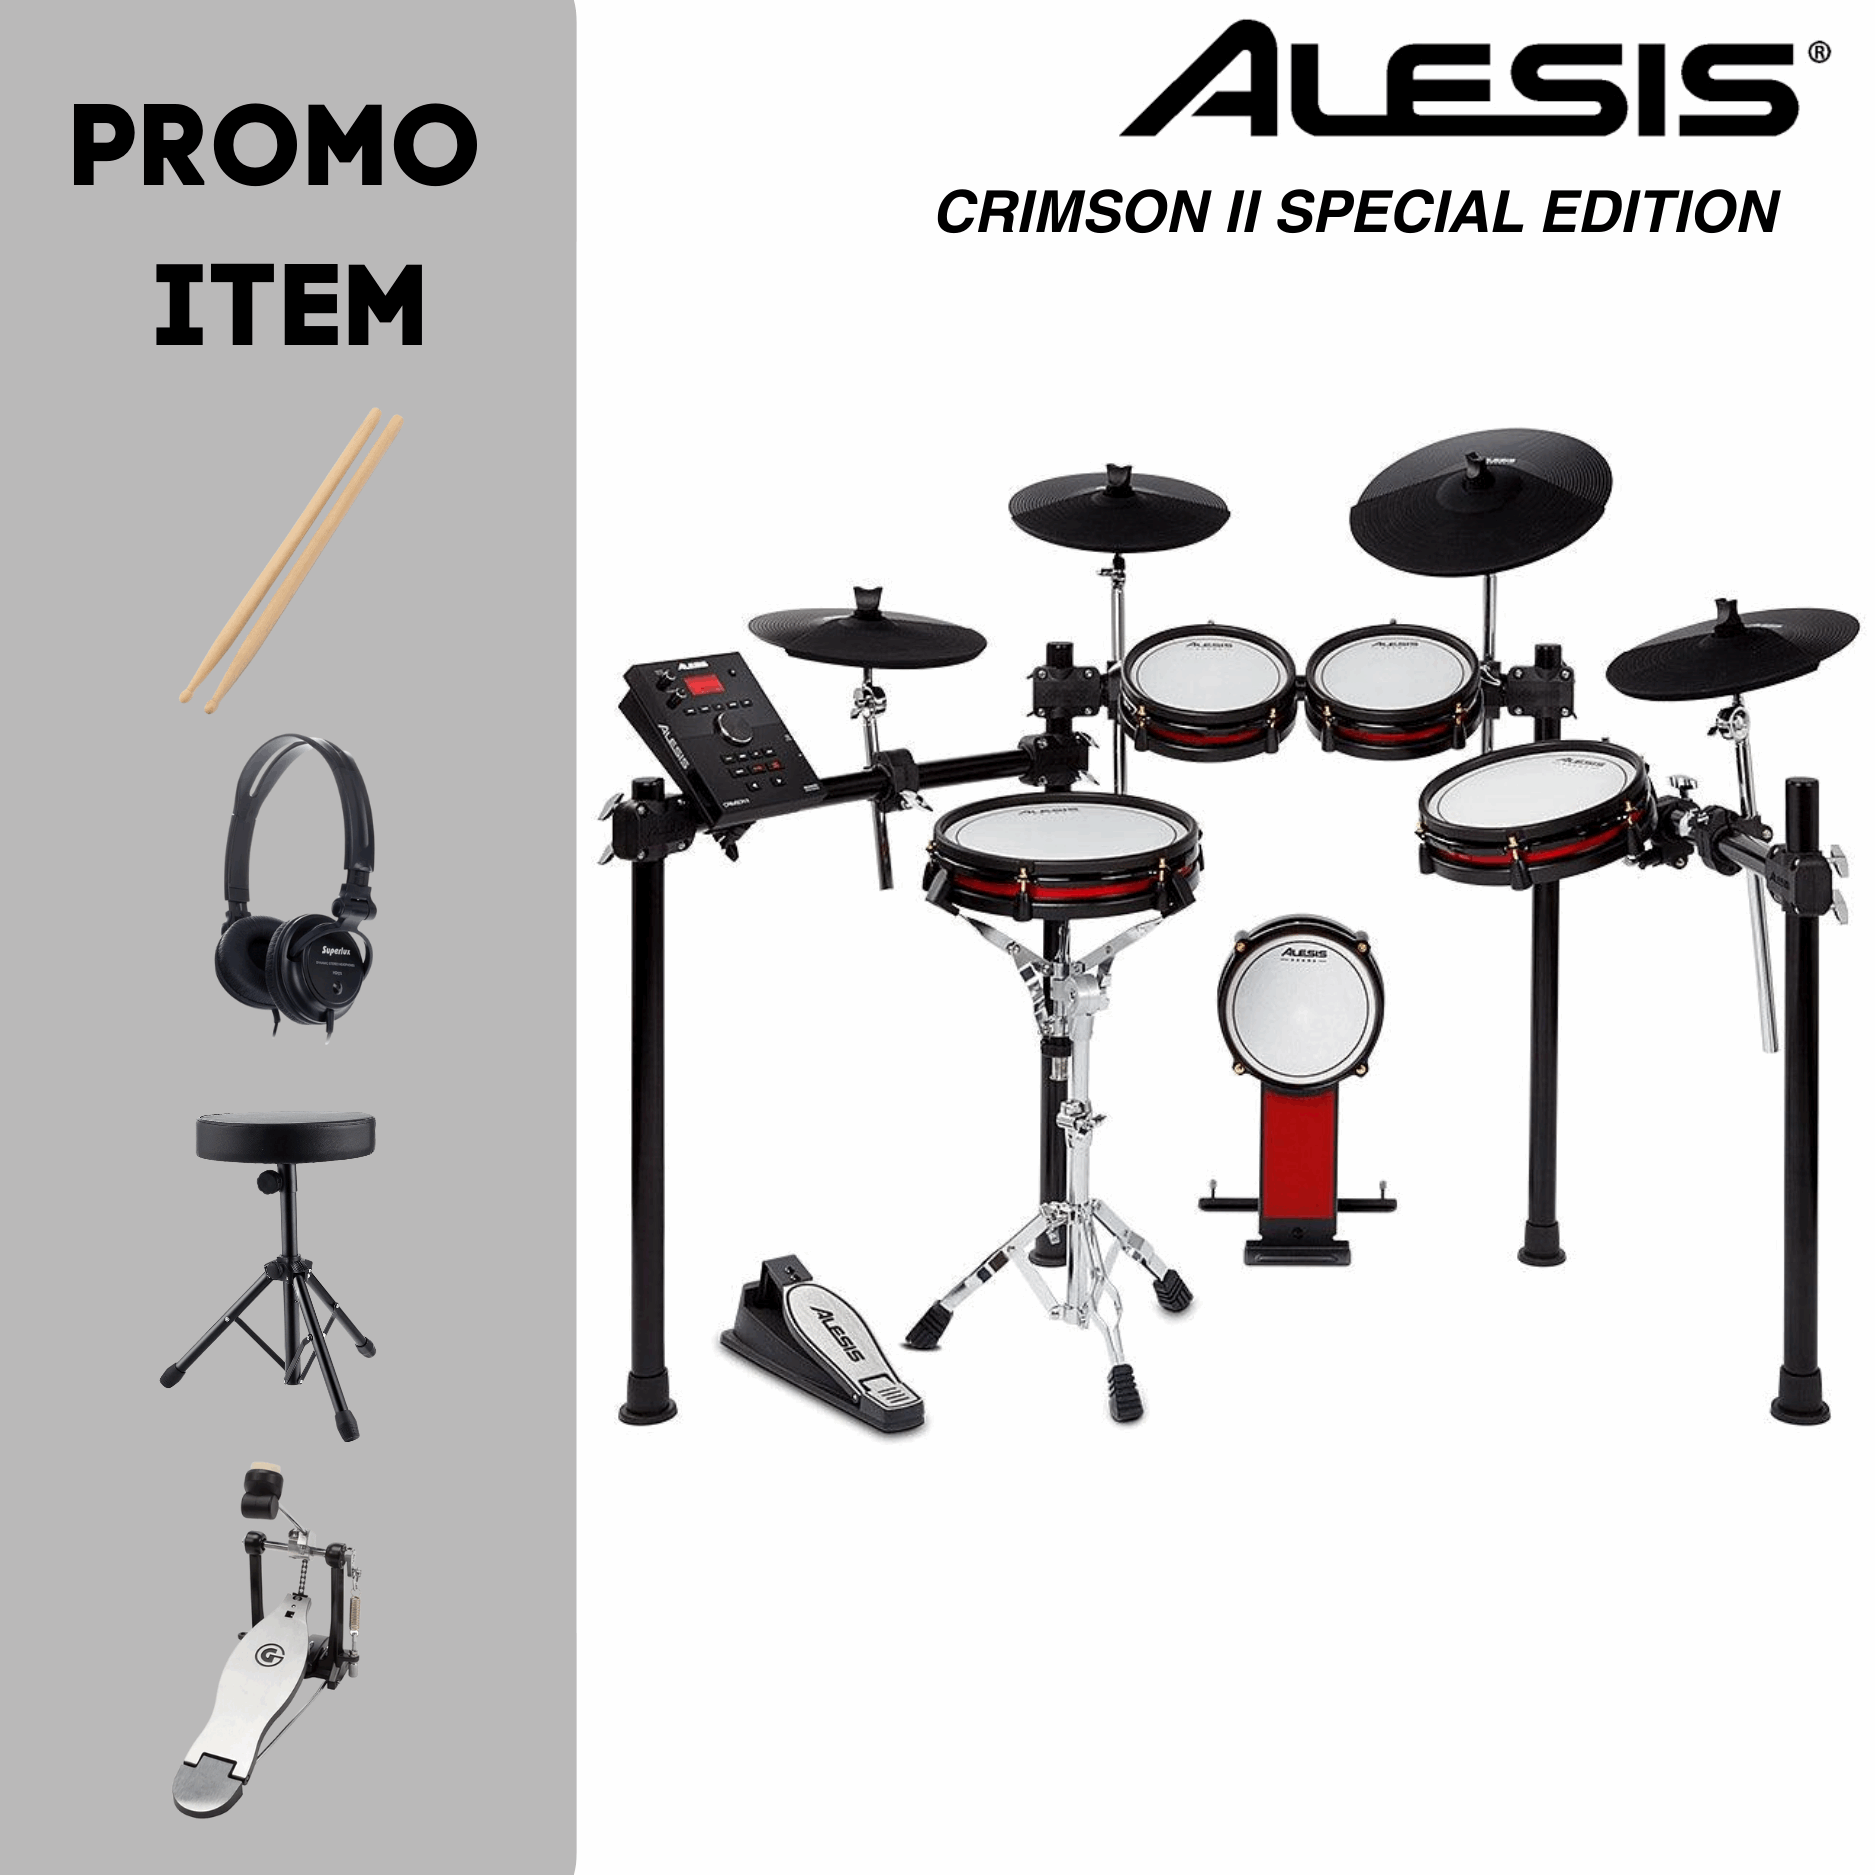 Alesis Crimson II With Promo Items Zoso Music